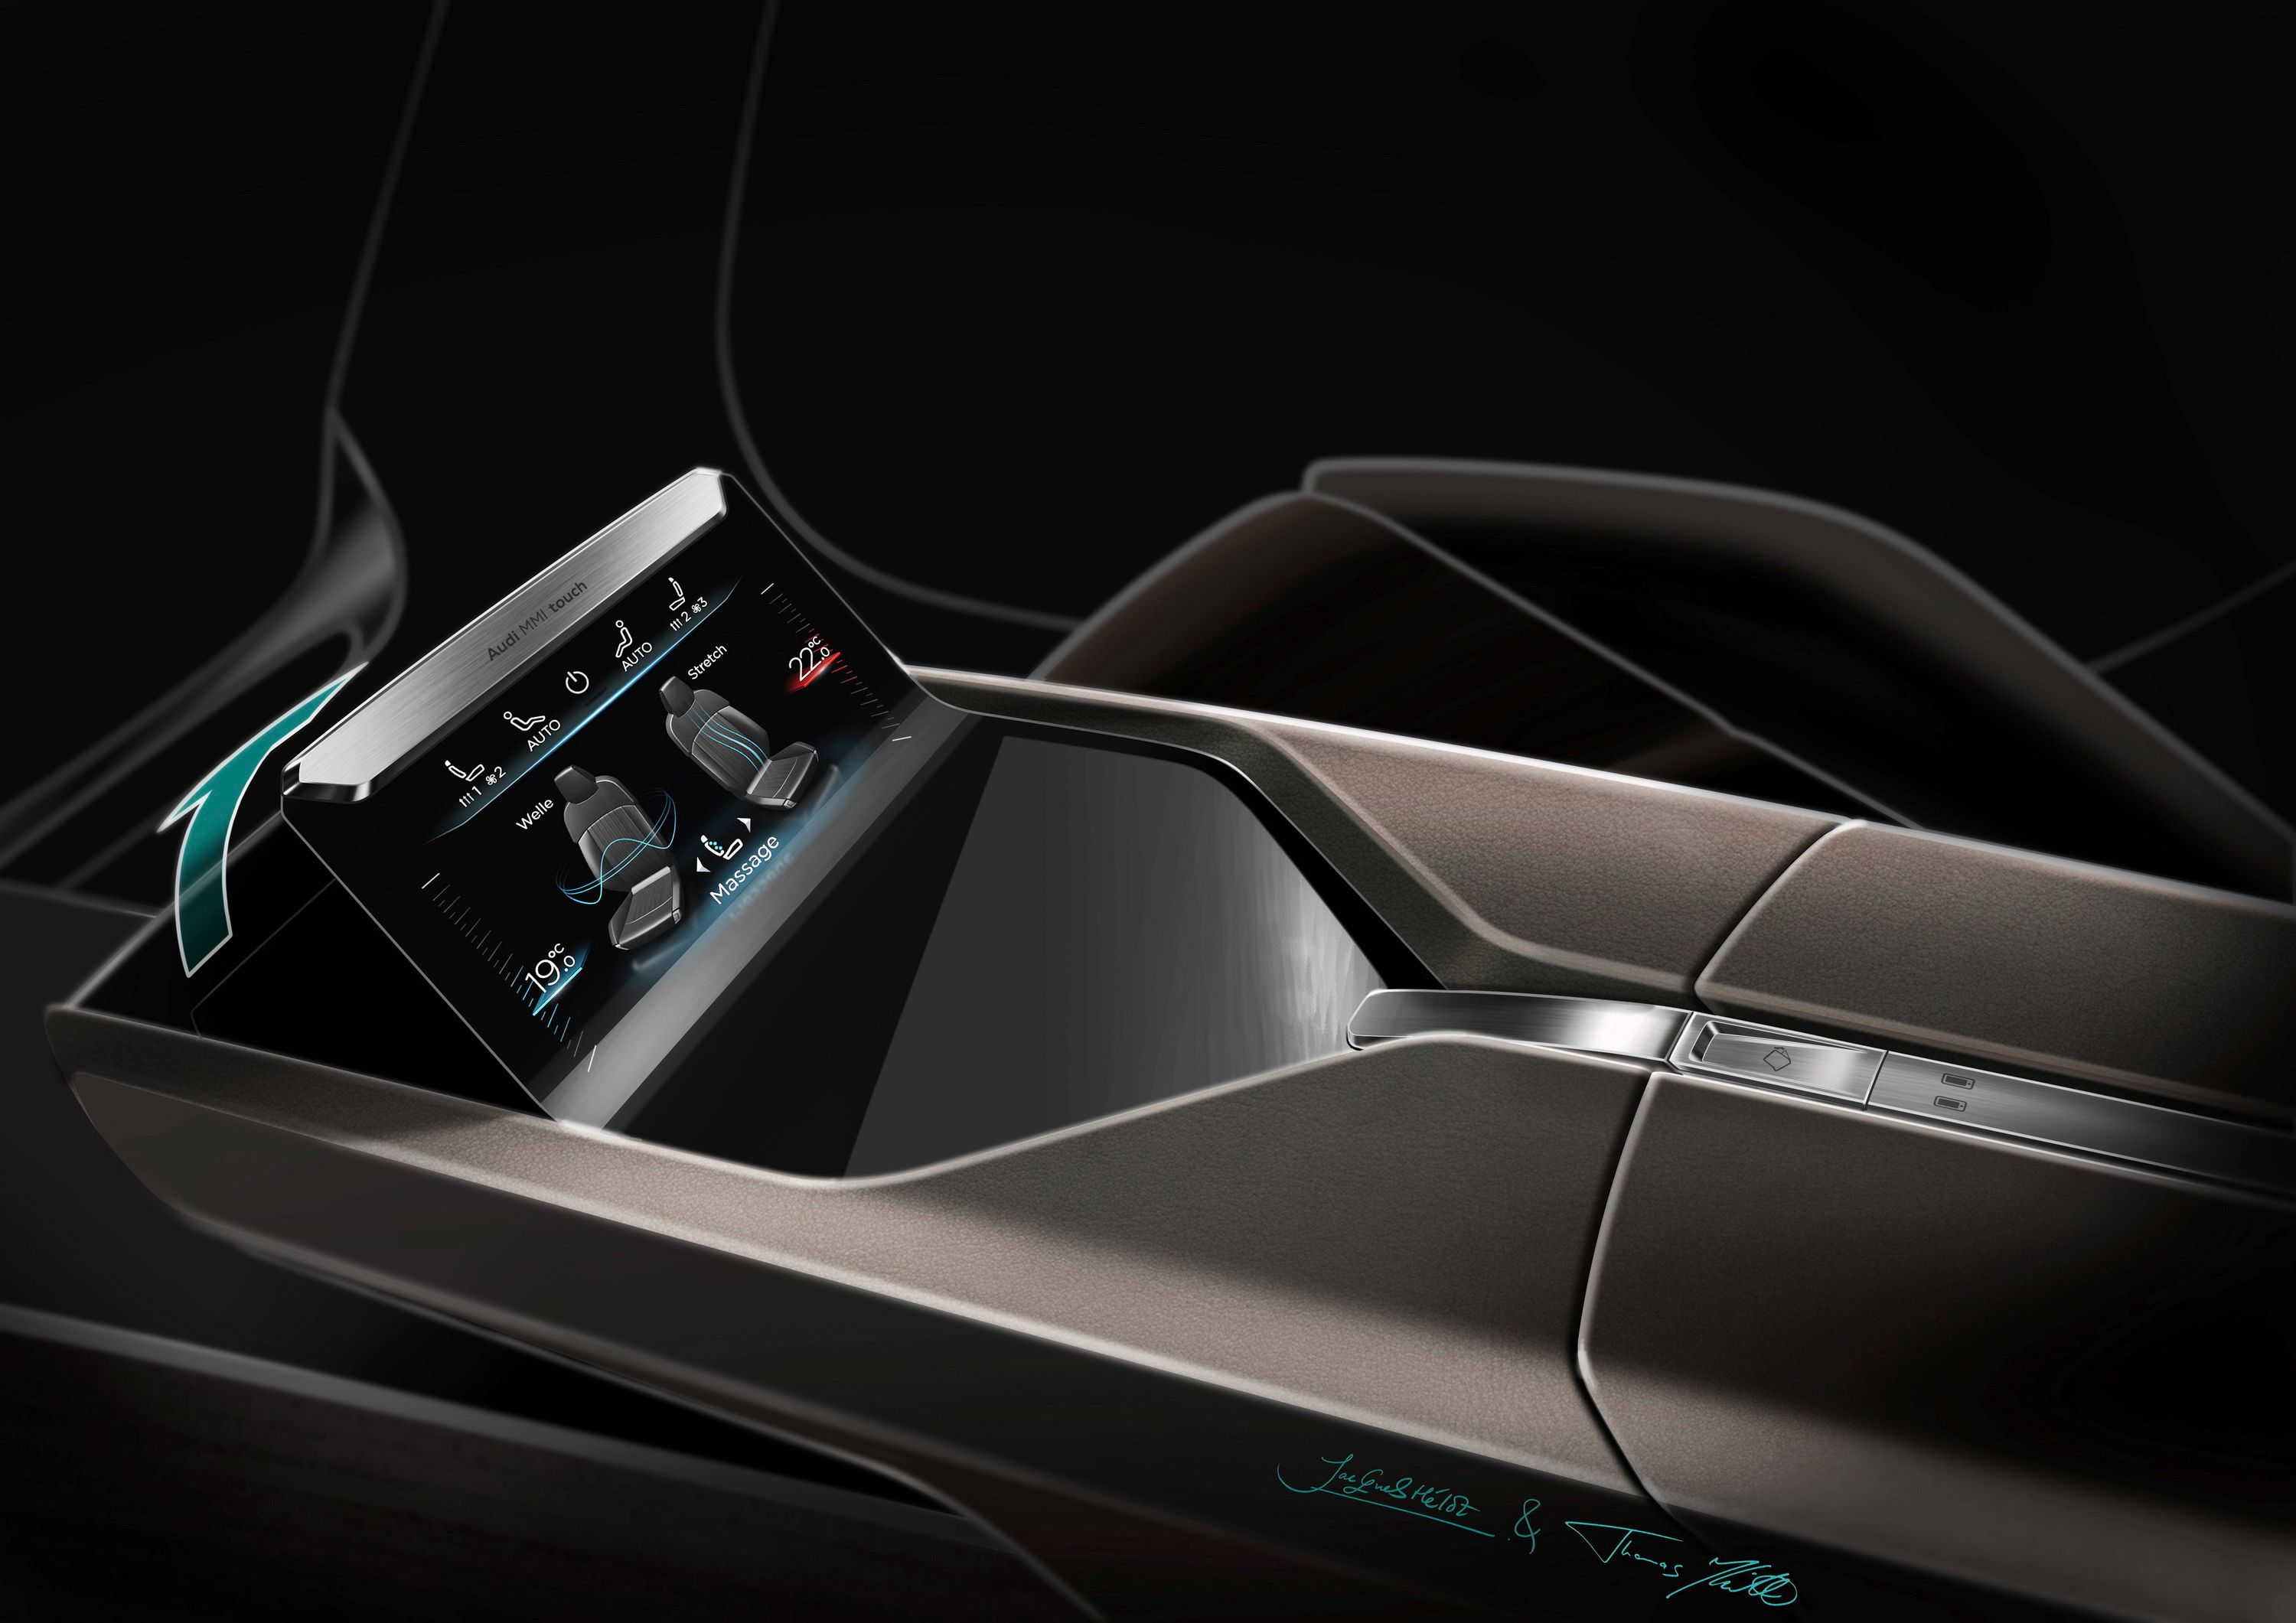 2015 Audi Prologue Avant Concept